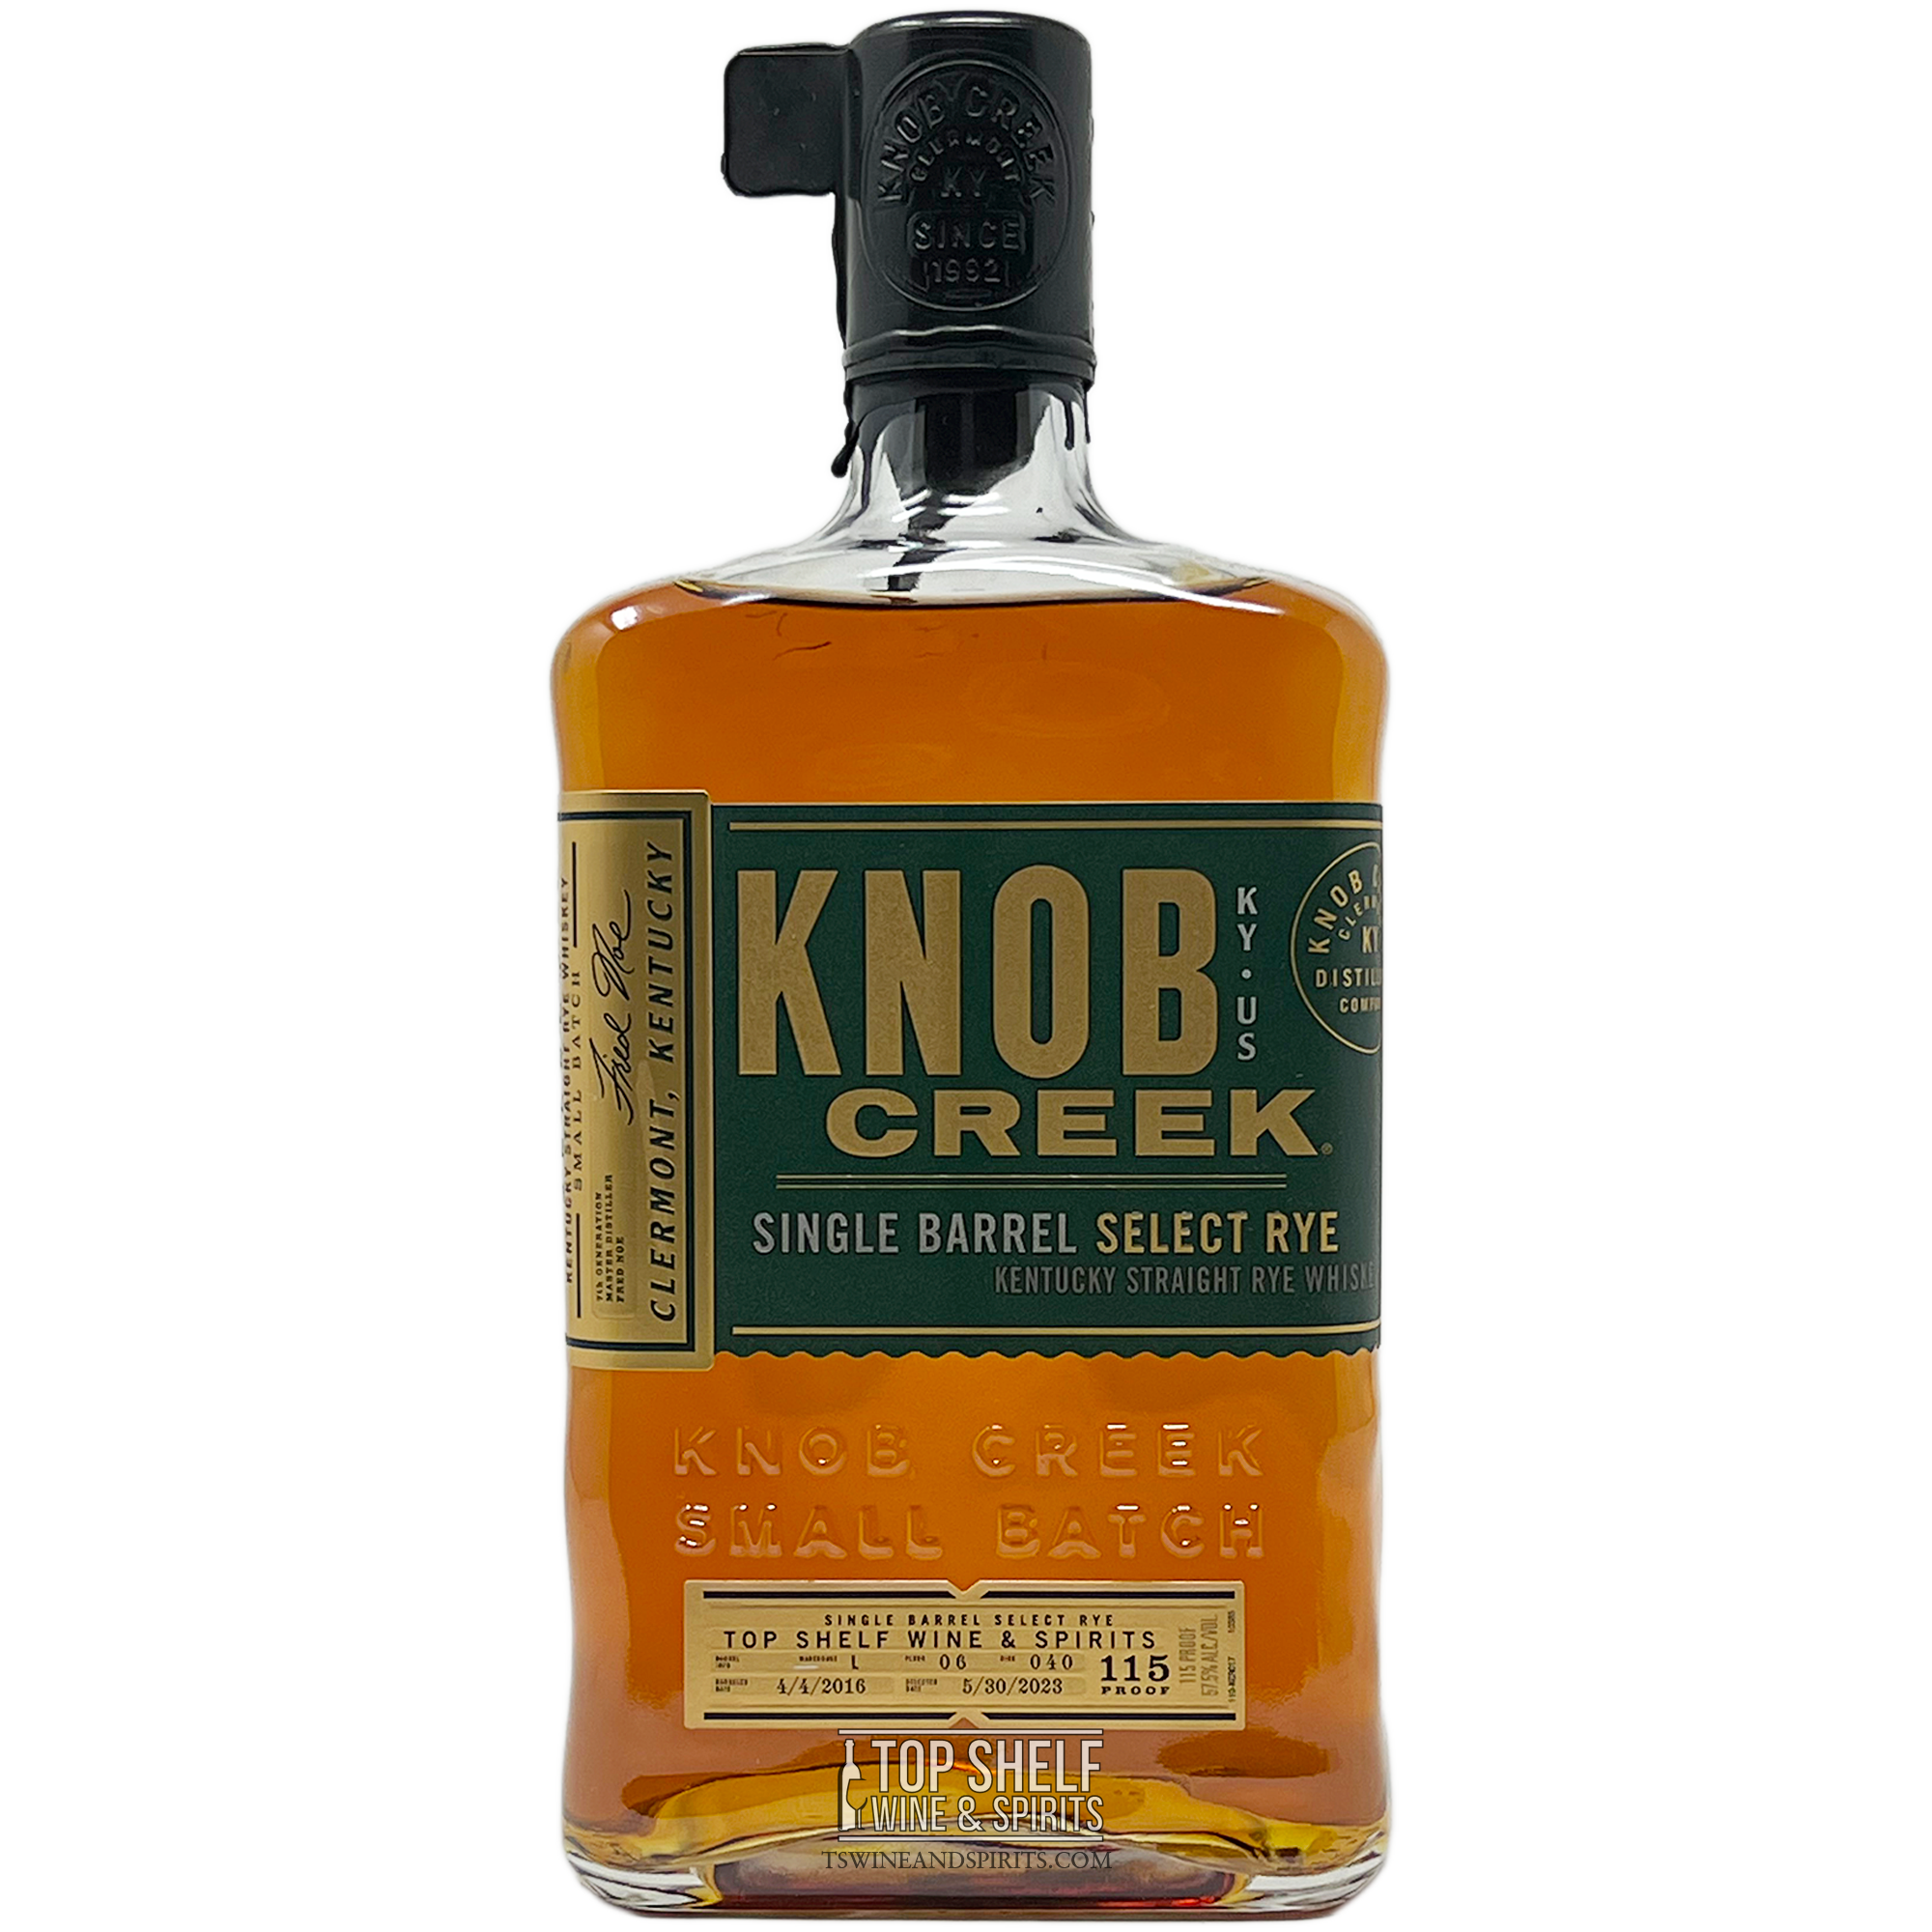 Knob Creek Single Barrel Rye (Private Selection)